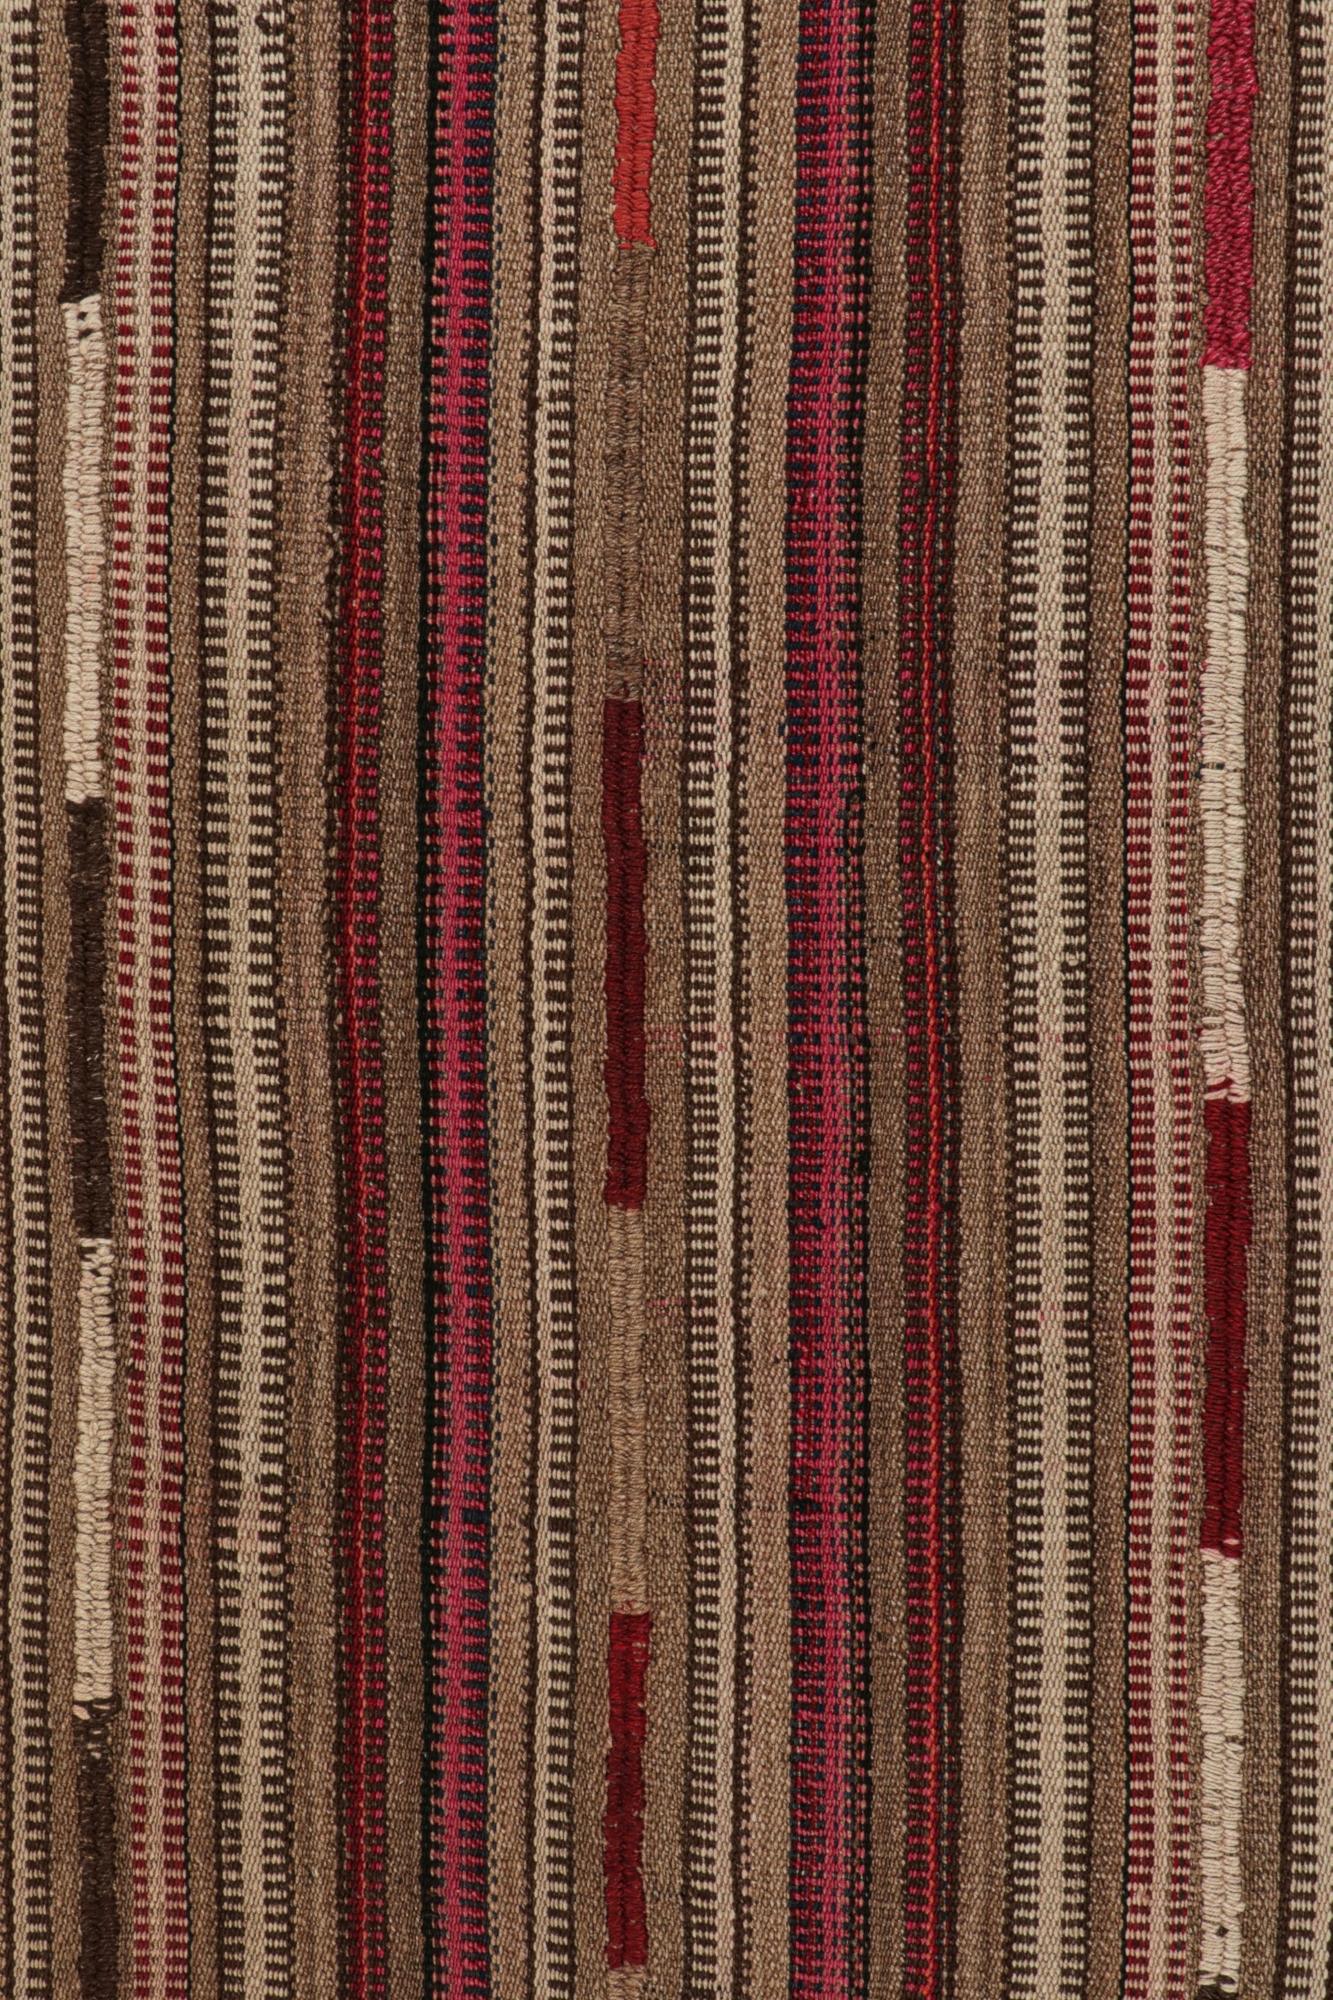 Tribal Vintage Persian Kilim in Pink and Beige-Brown Stripes by Rug & Kilim For Sale